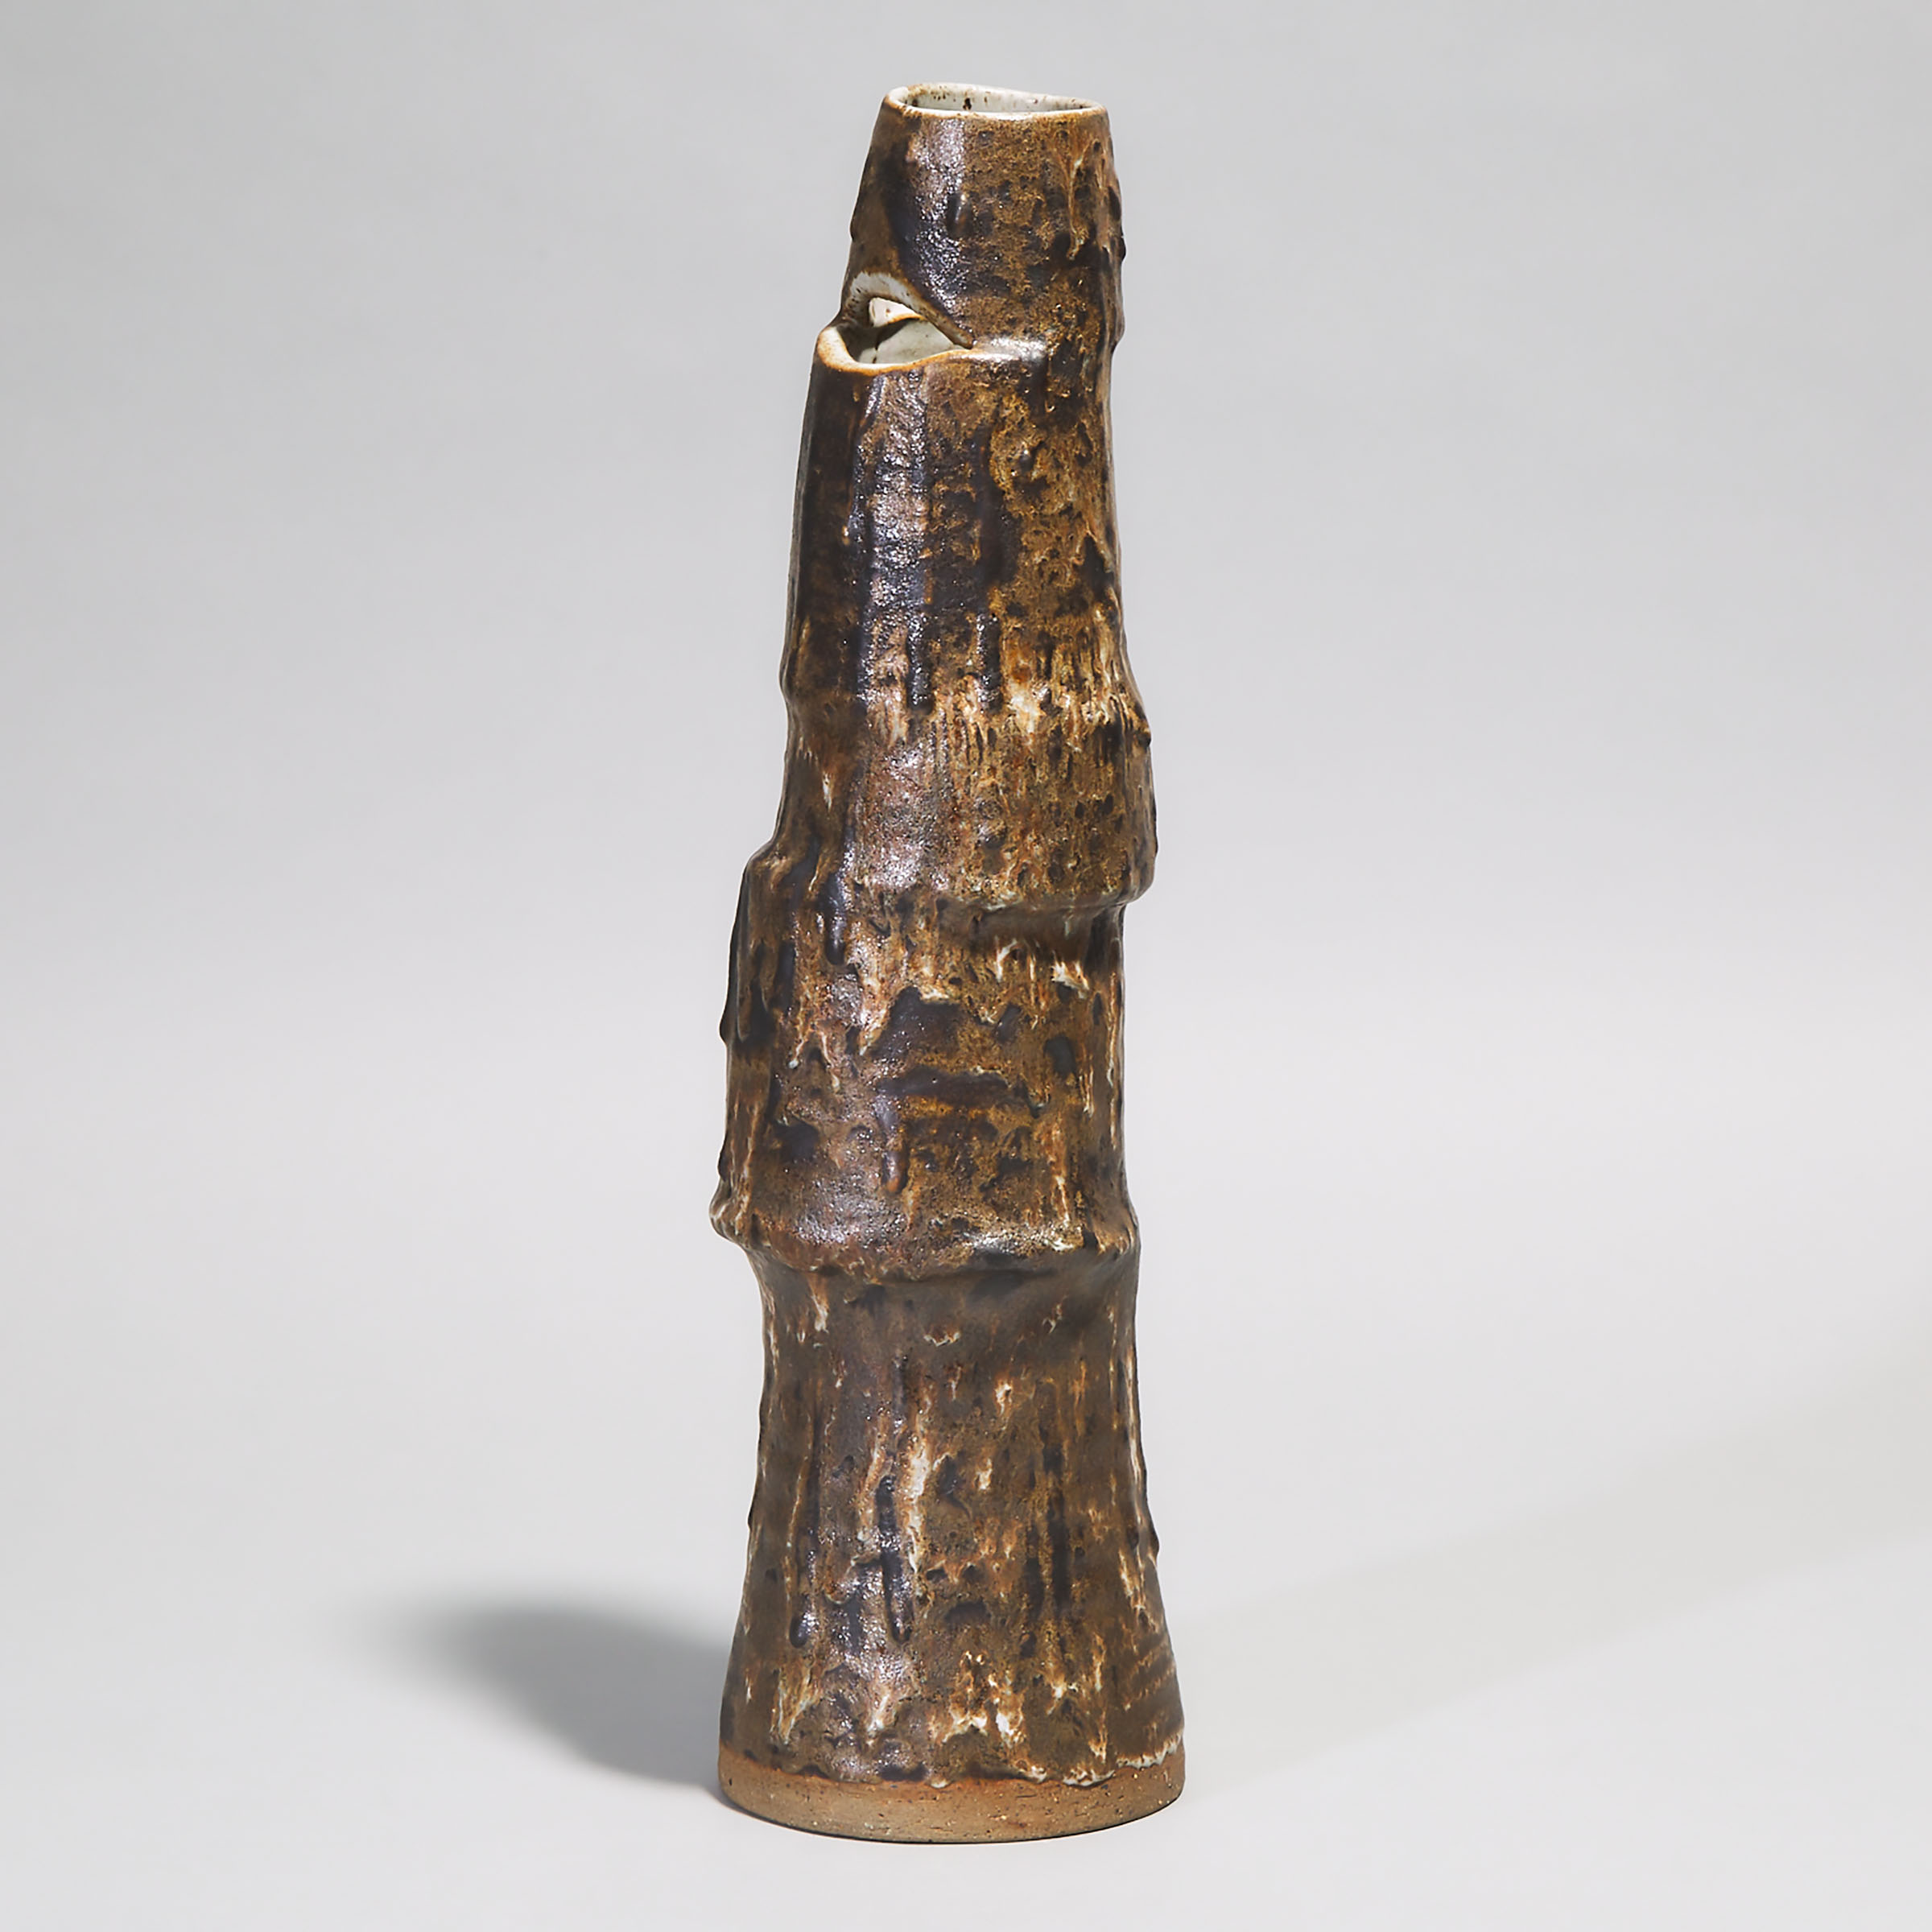 Tessa Kidick (Canadian, 1915-2002), Tall Stoneware Vase, 1972